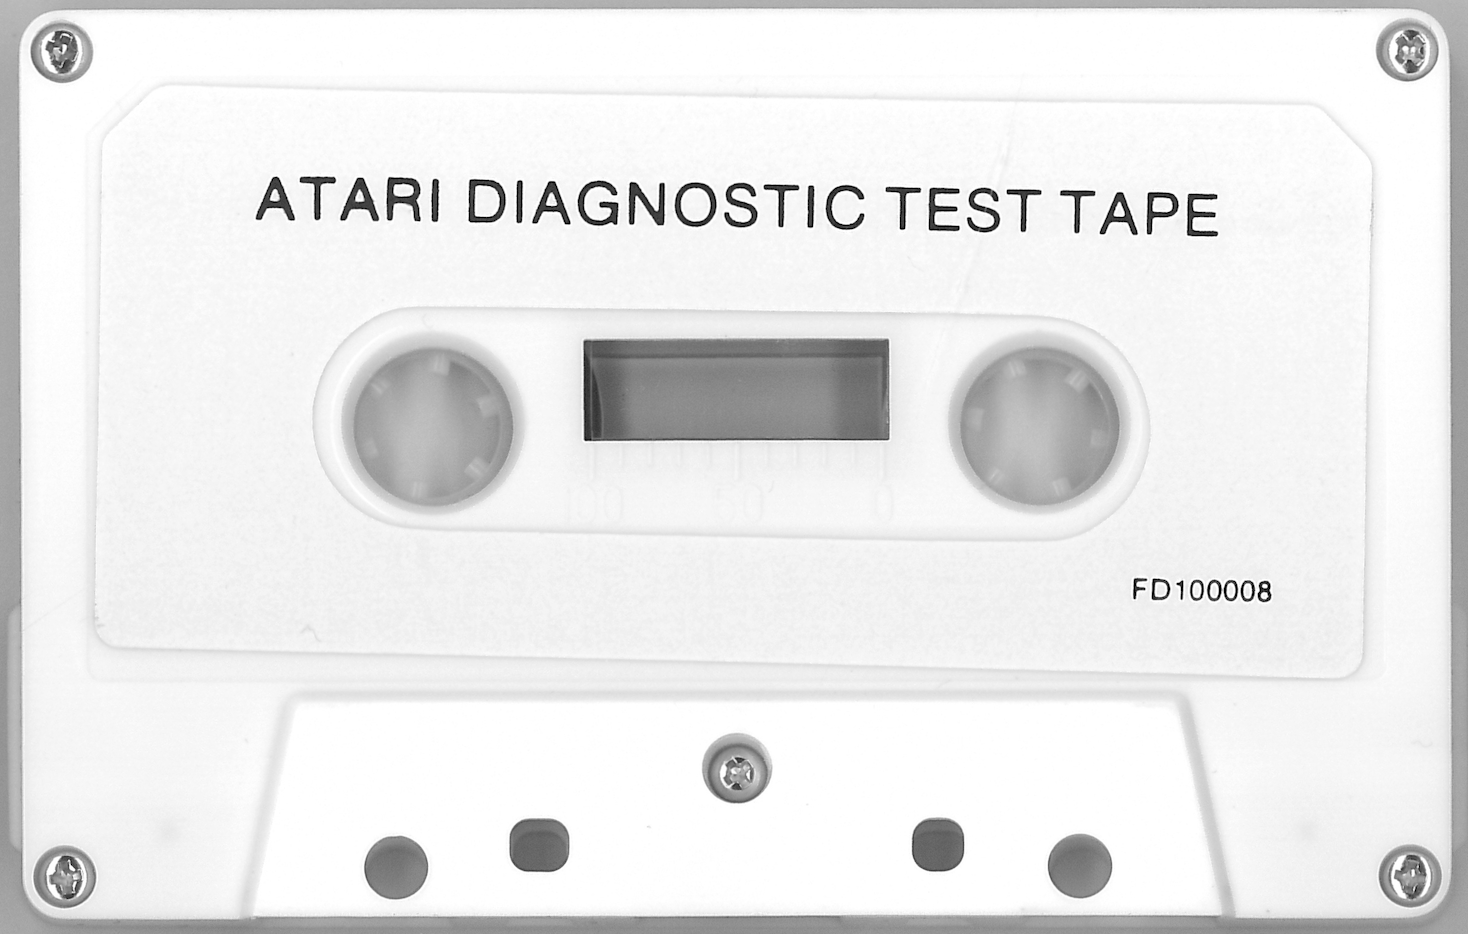 ATARI Diagnostic Test Tape/ATARI Diagnostic Test Tape (FD100008)-front.png